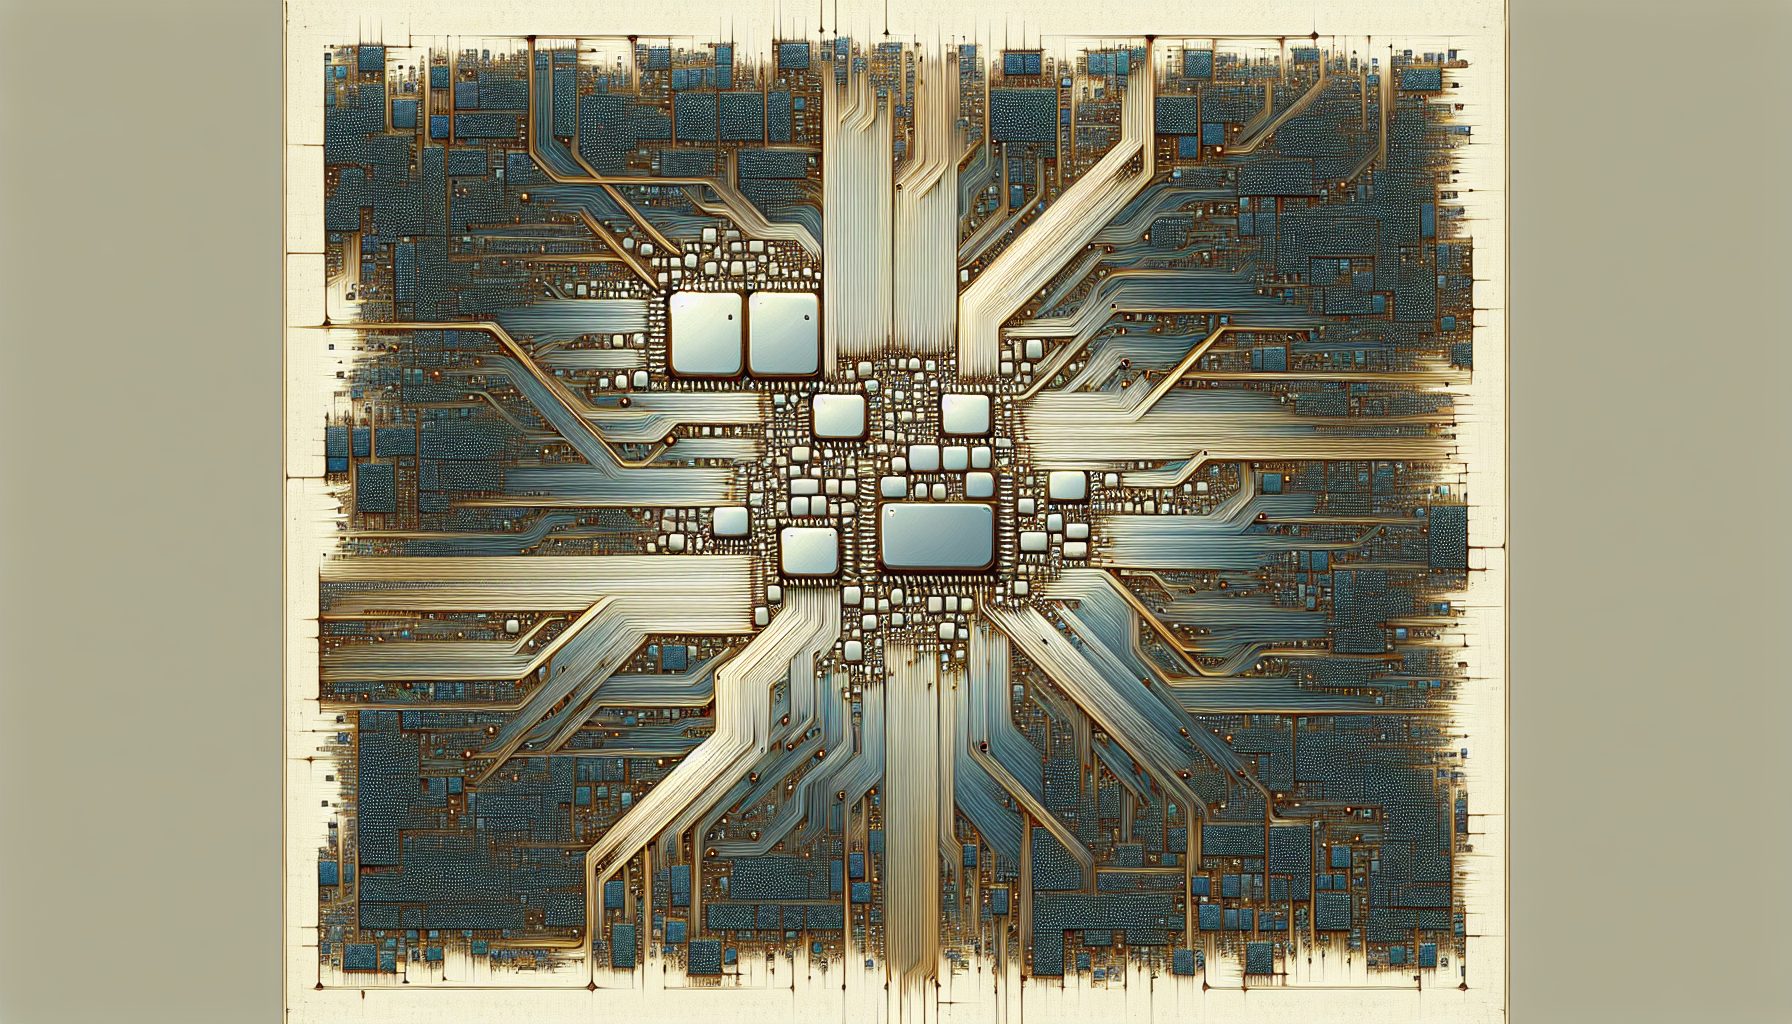 Microcomputer Snapshot